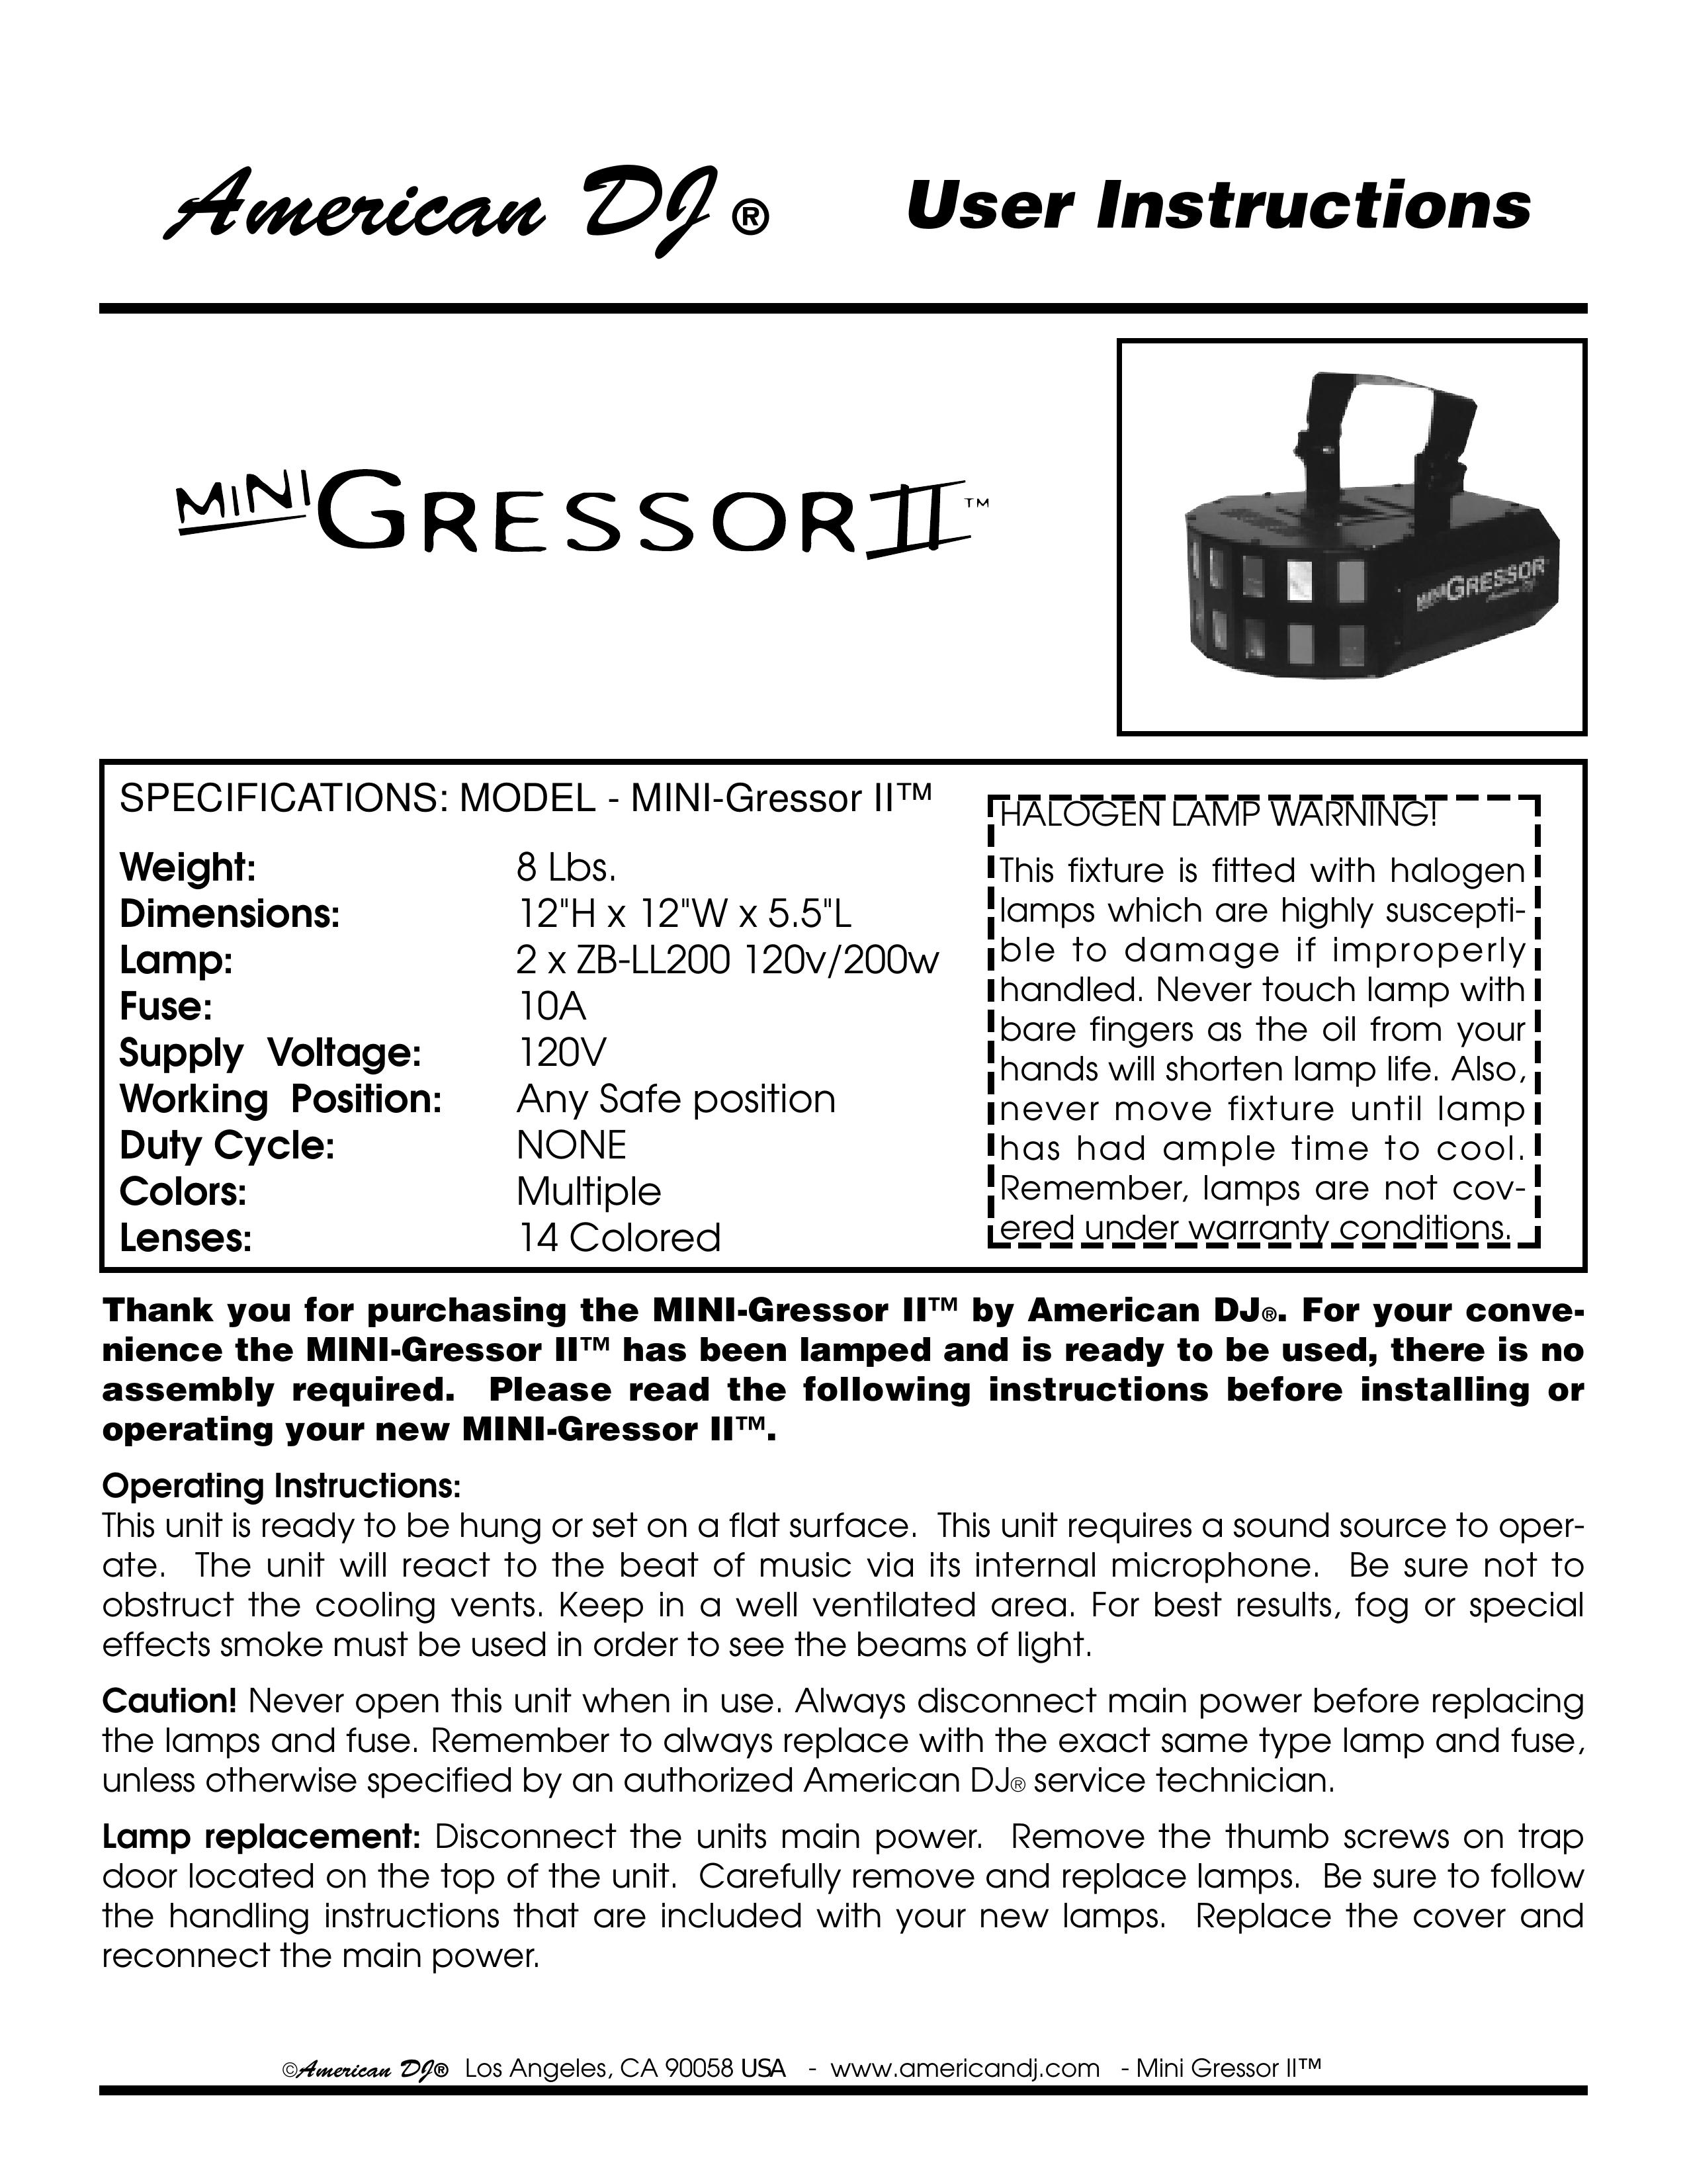 American DJ Mini-Gressor II Musical Instrument User Manual